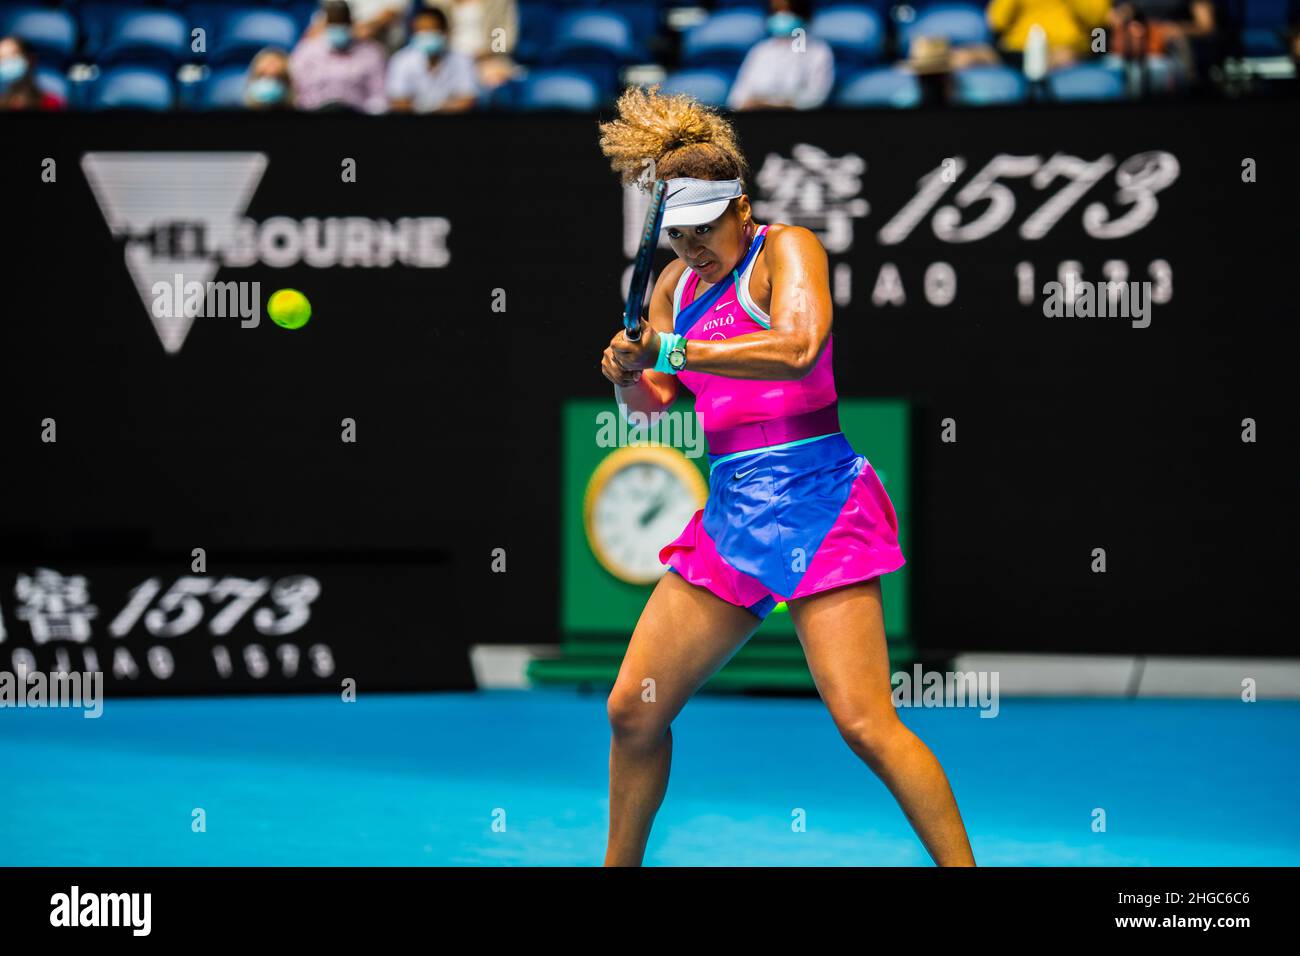 Die Japanerin Naomi Osaka in Aktion während des Australian Open 2022 Round 1-Spiels des Grand Slams gegen Camila Osorio aus Kolumbien in der Rod Laver Arena im Melbourne Olympic Park. Endnote; Naomi Osaka 6:3 Camila Osorio. Stockfoto